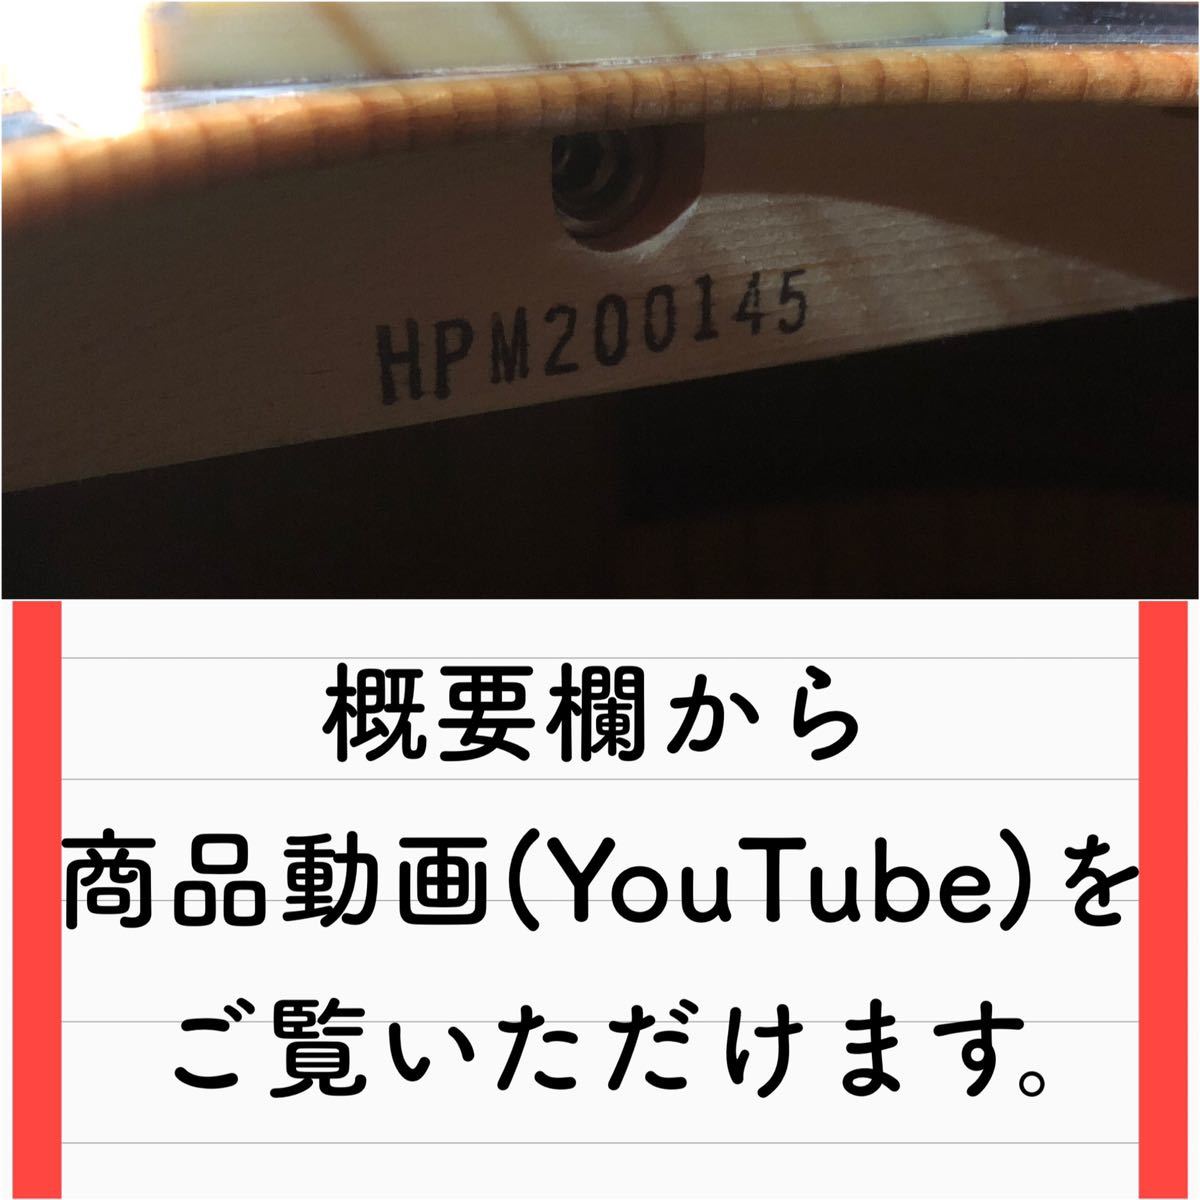 □YAMAHA ヤマハ アコースティックギター FS830 ソフトケース 取扱説明書 付き アコギ 楽器 弦楽器 ギター 6弦 HPM200145 □23122502_画像9